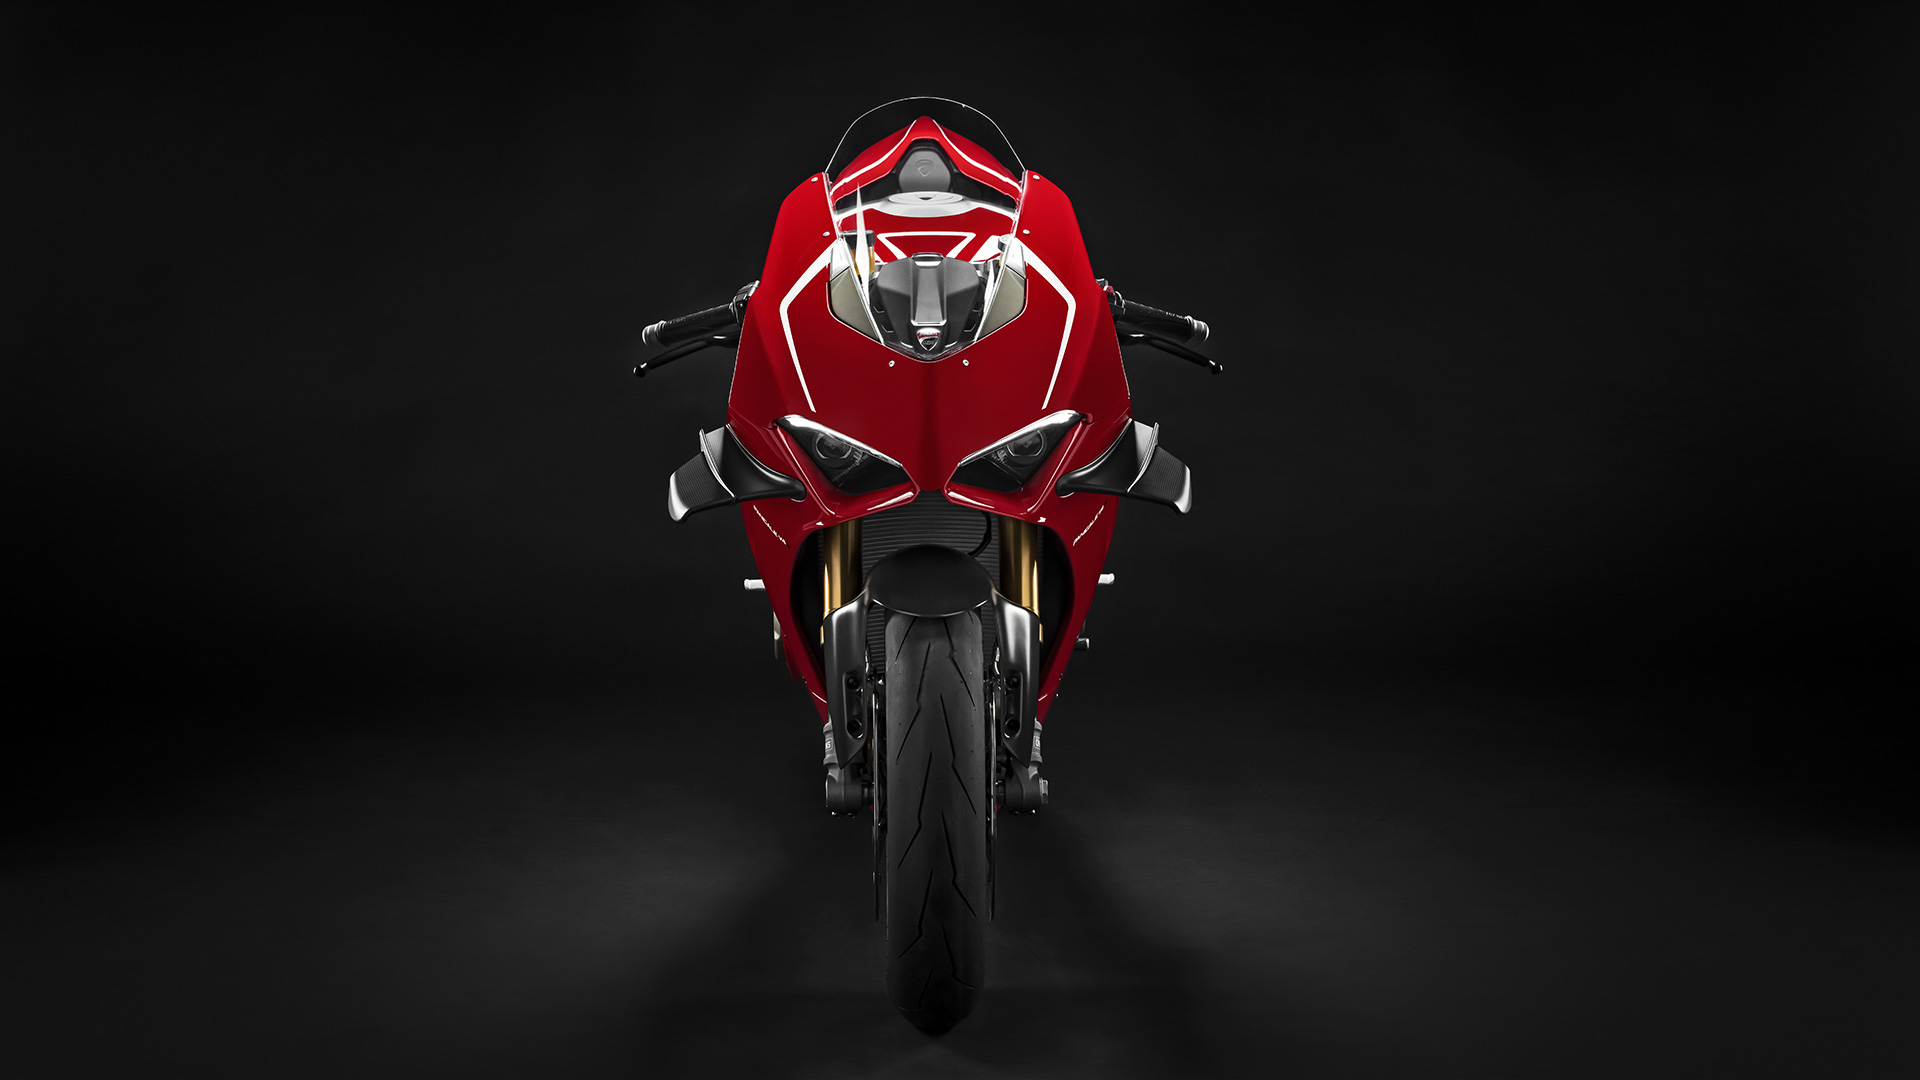 Ducati Reveals 2019 Panigale V4 R